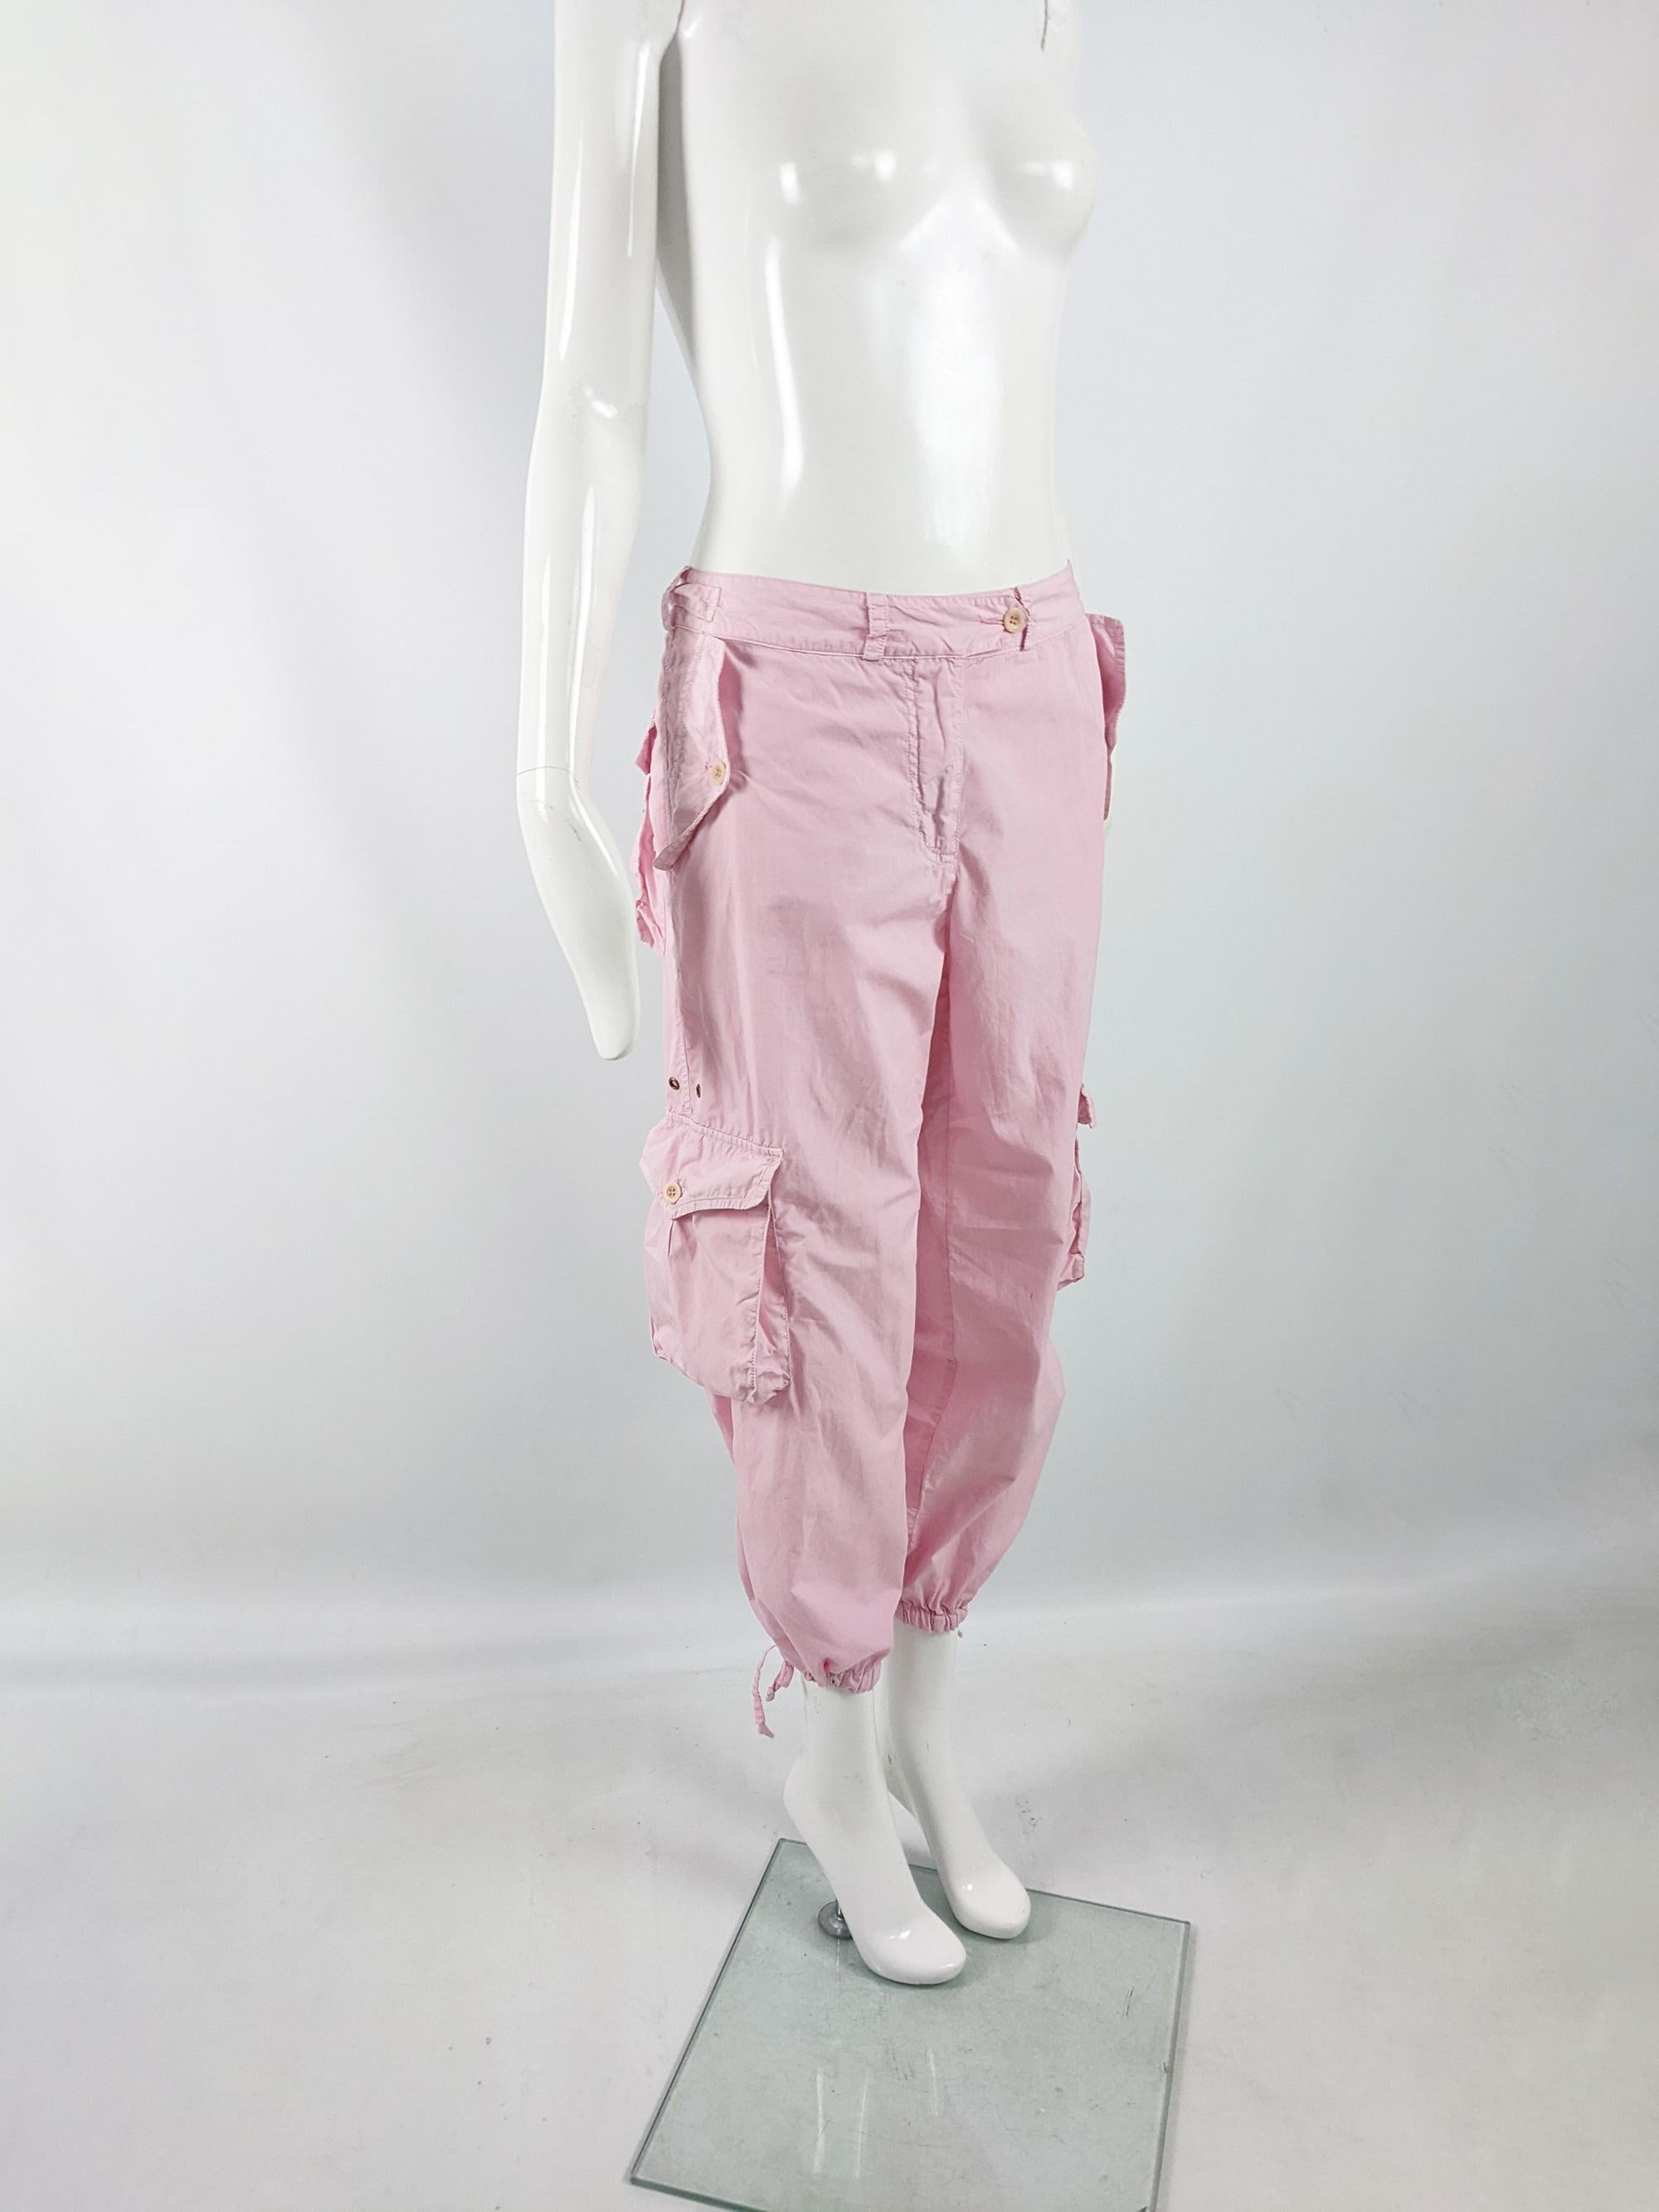 Gray Paul Smith Vintage y2k Pastel Pink Cargo Parachute Pants, 2000s